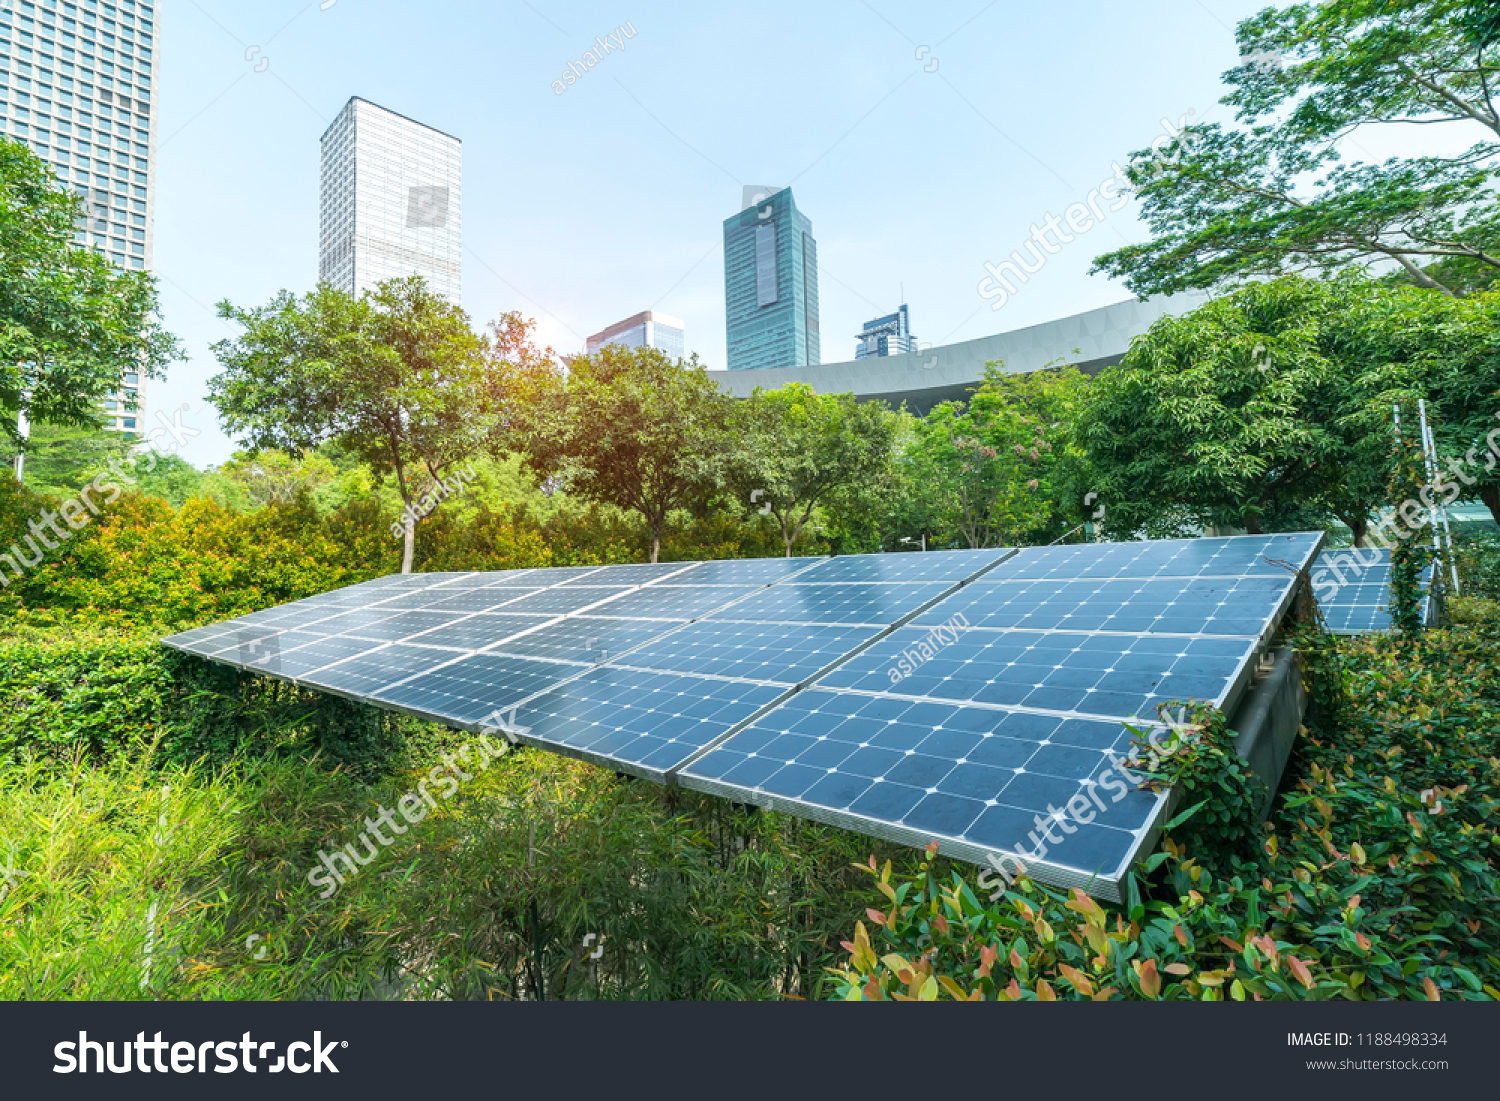 Ecological energy renewable solar panel plant with urban landscape landmarks #1188498334